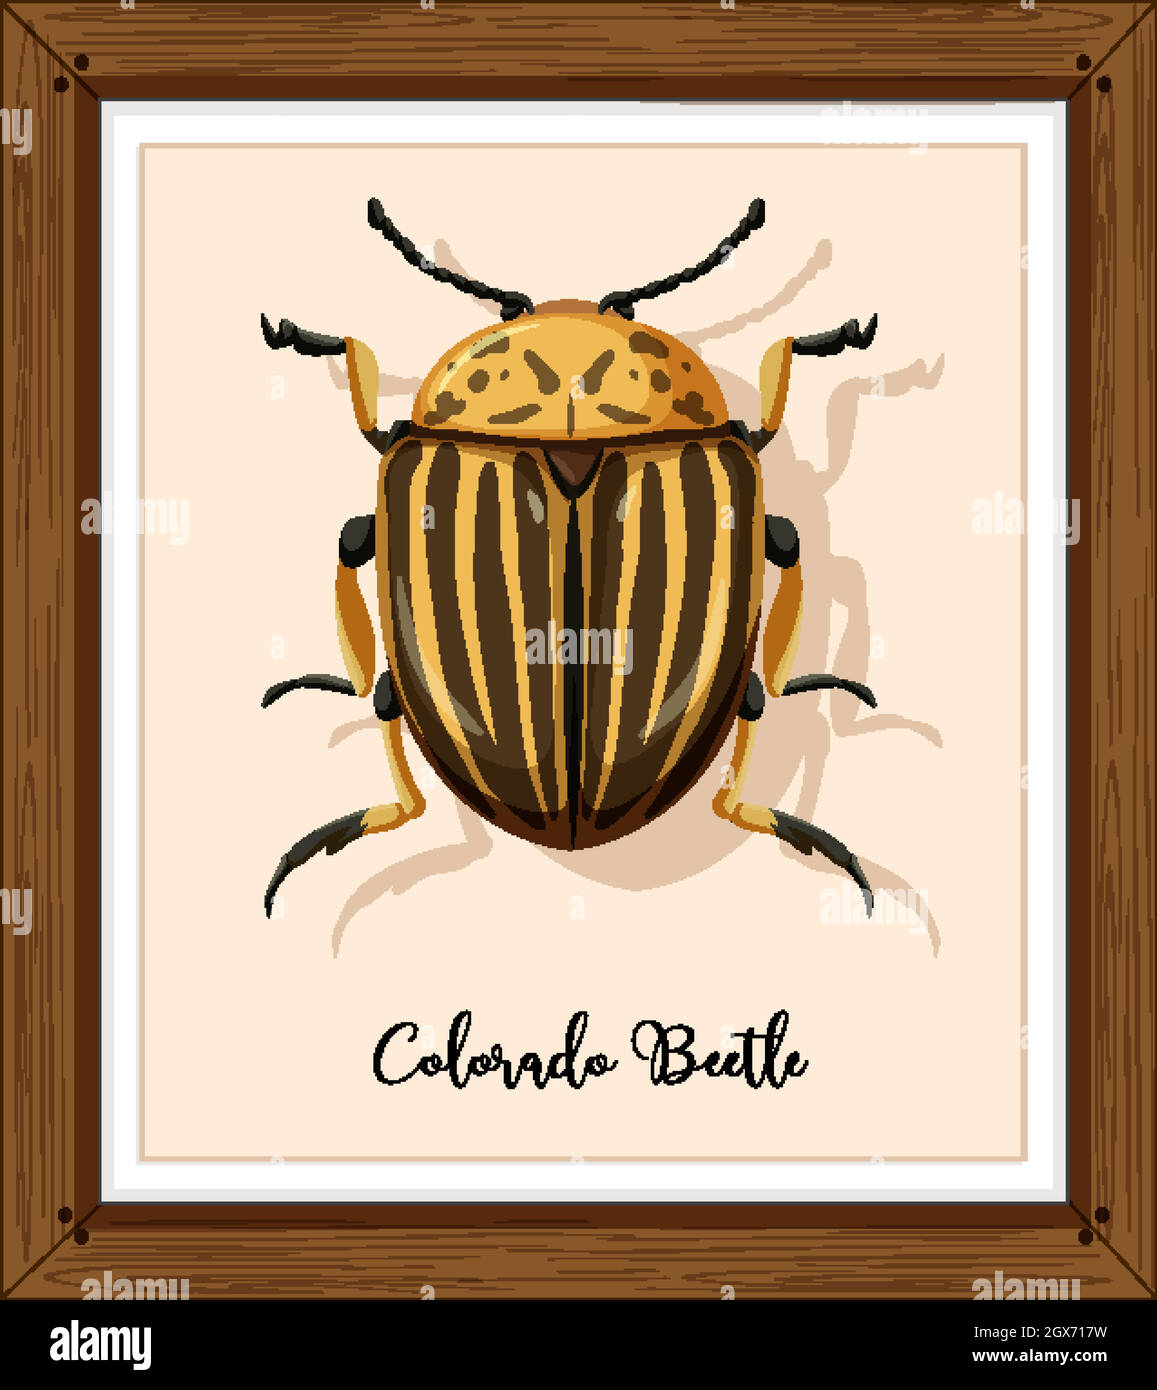 Colorado beetle on wooden frame Stock Vector